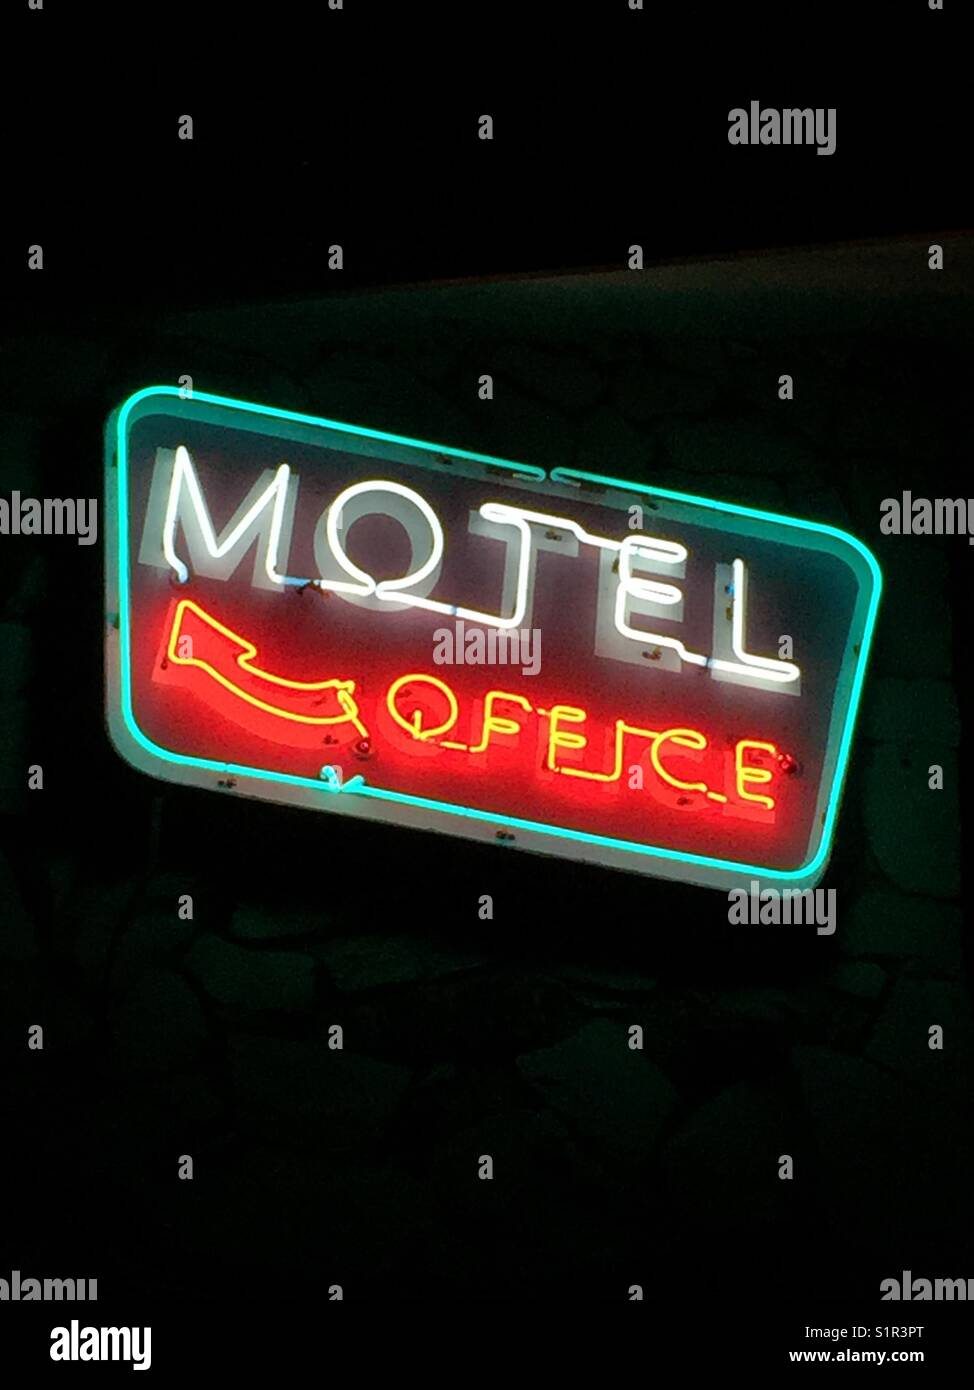 Motel office neon sign Stock Photo